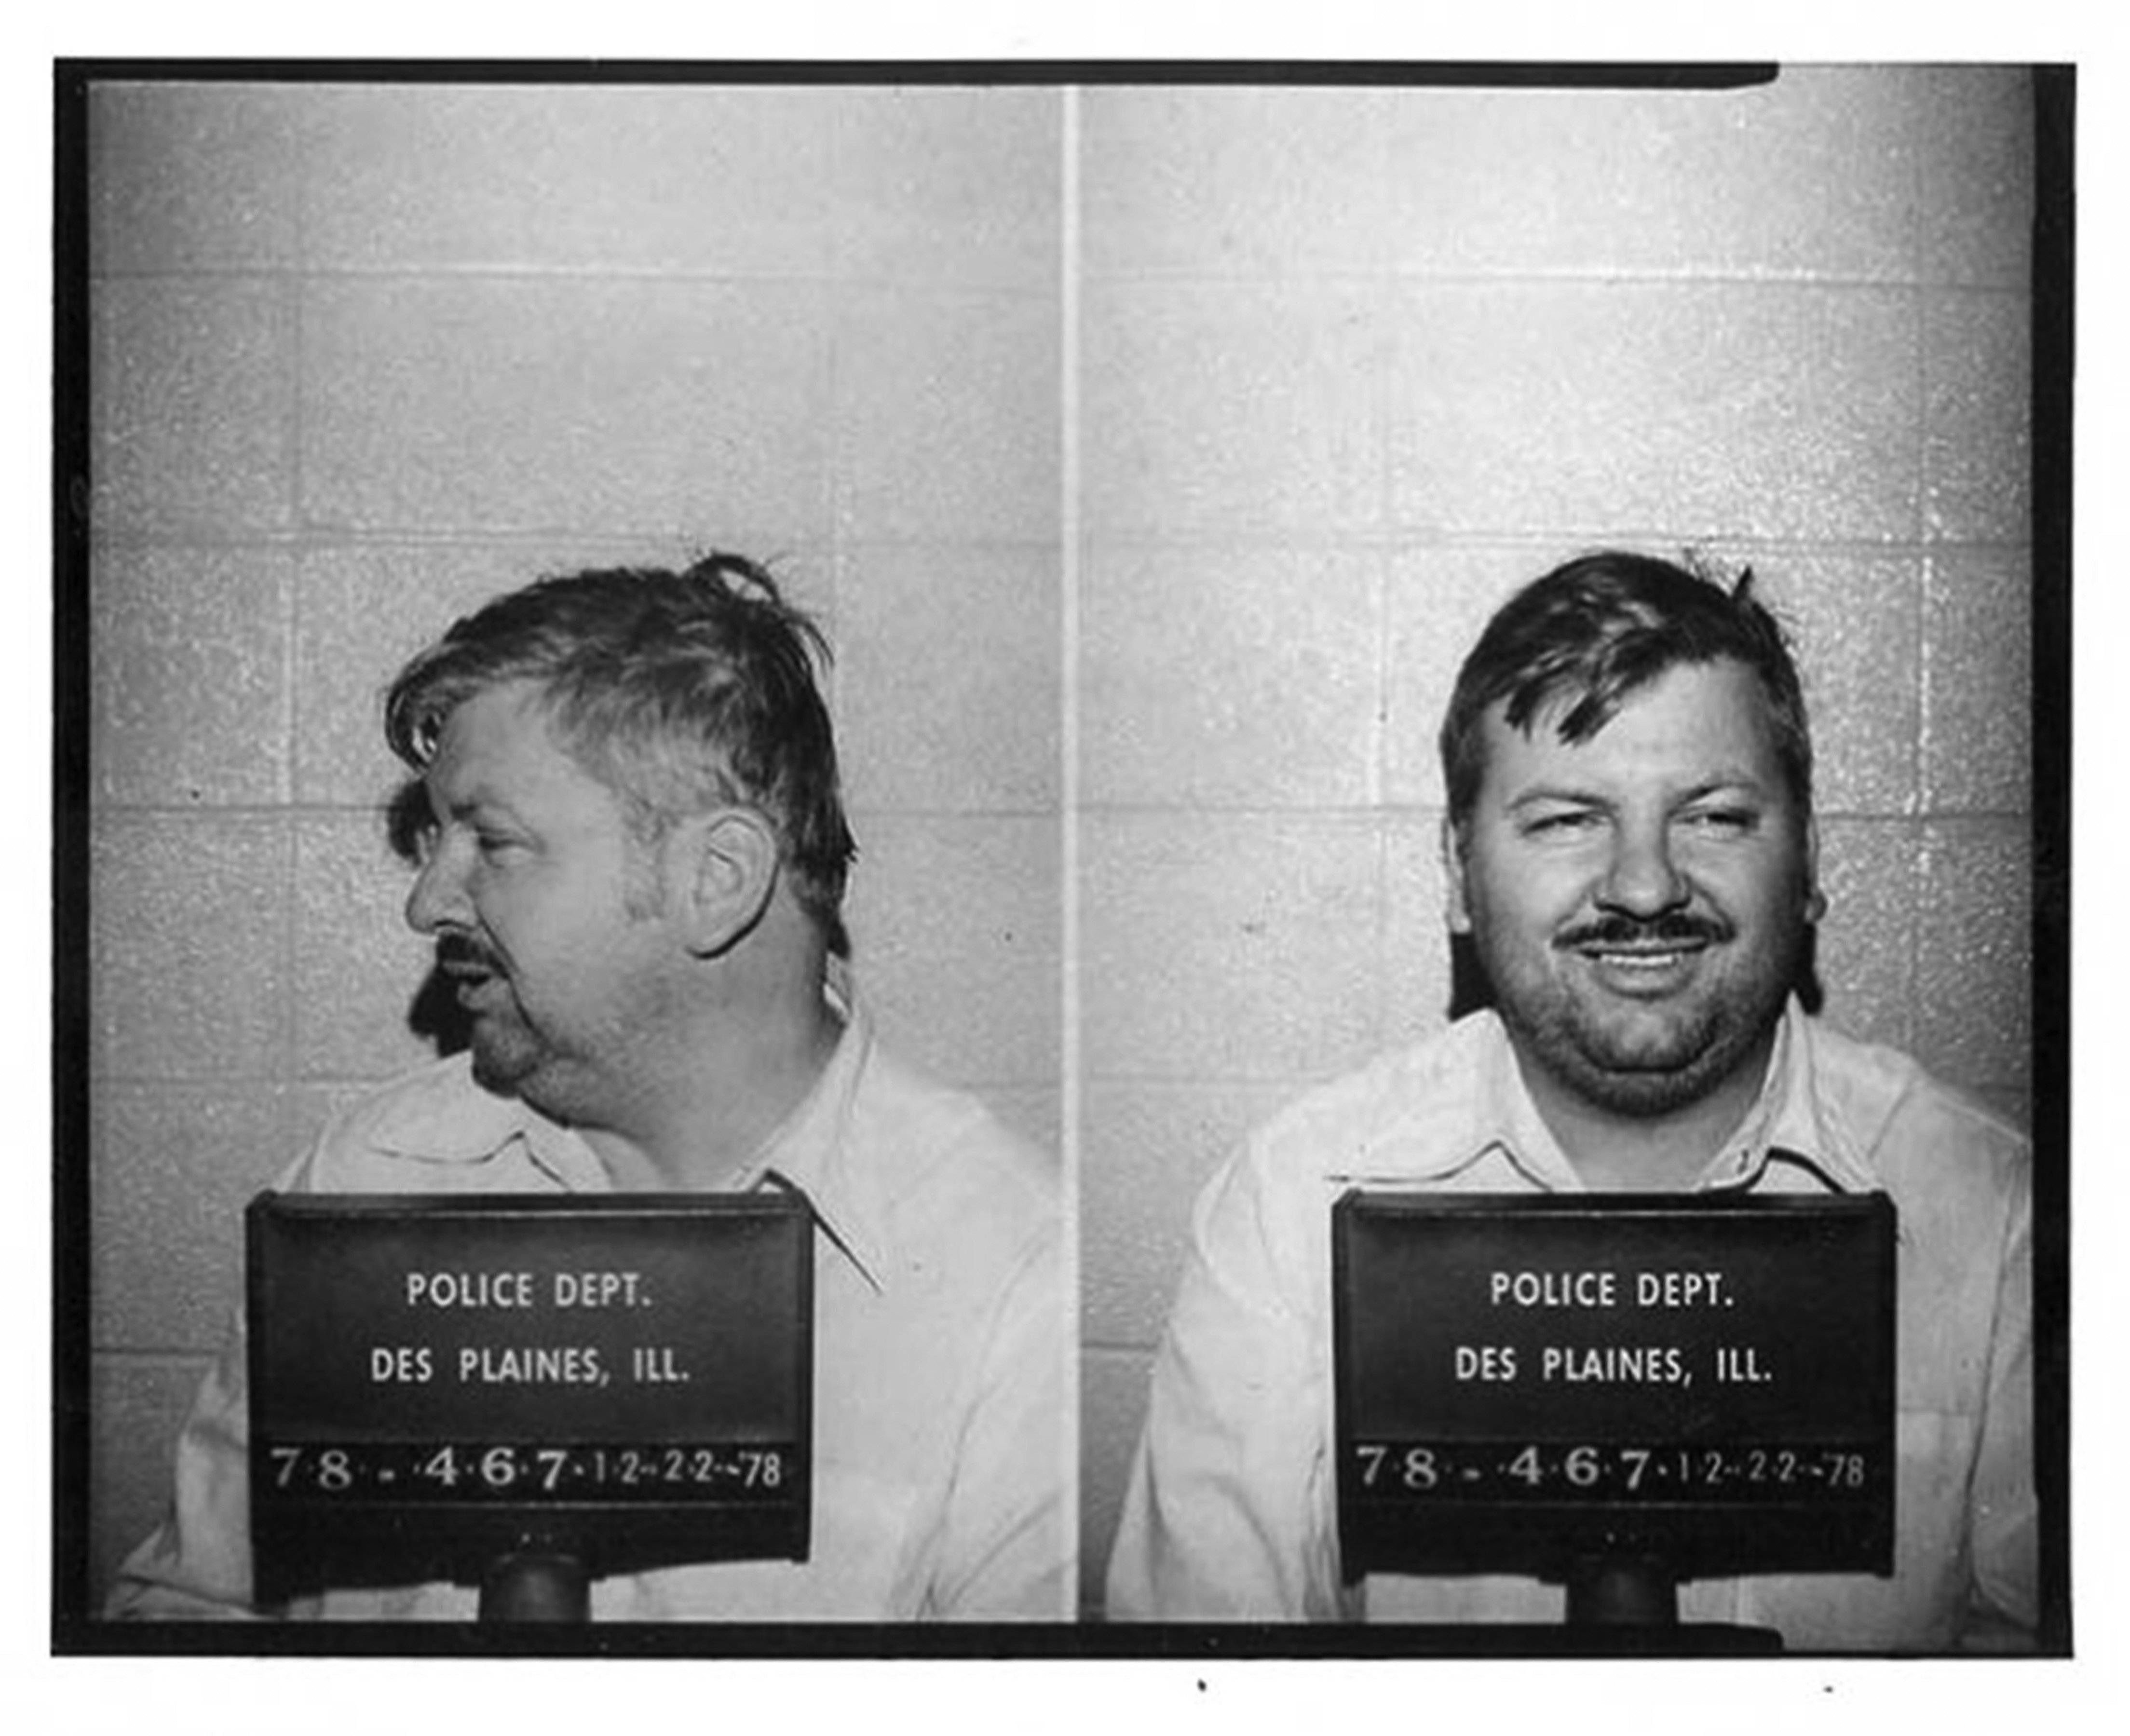 Serial killer John Wayne Gacy posed for the above Des Plaines Police Department mug shot